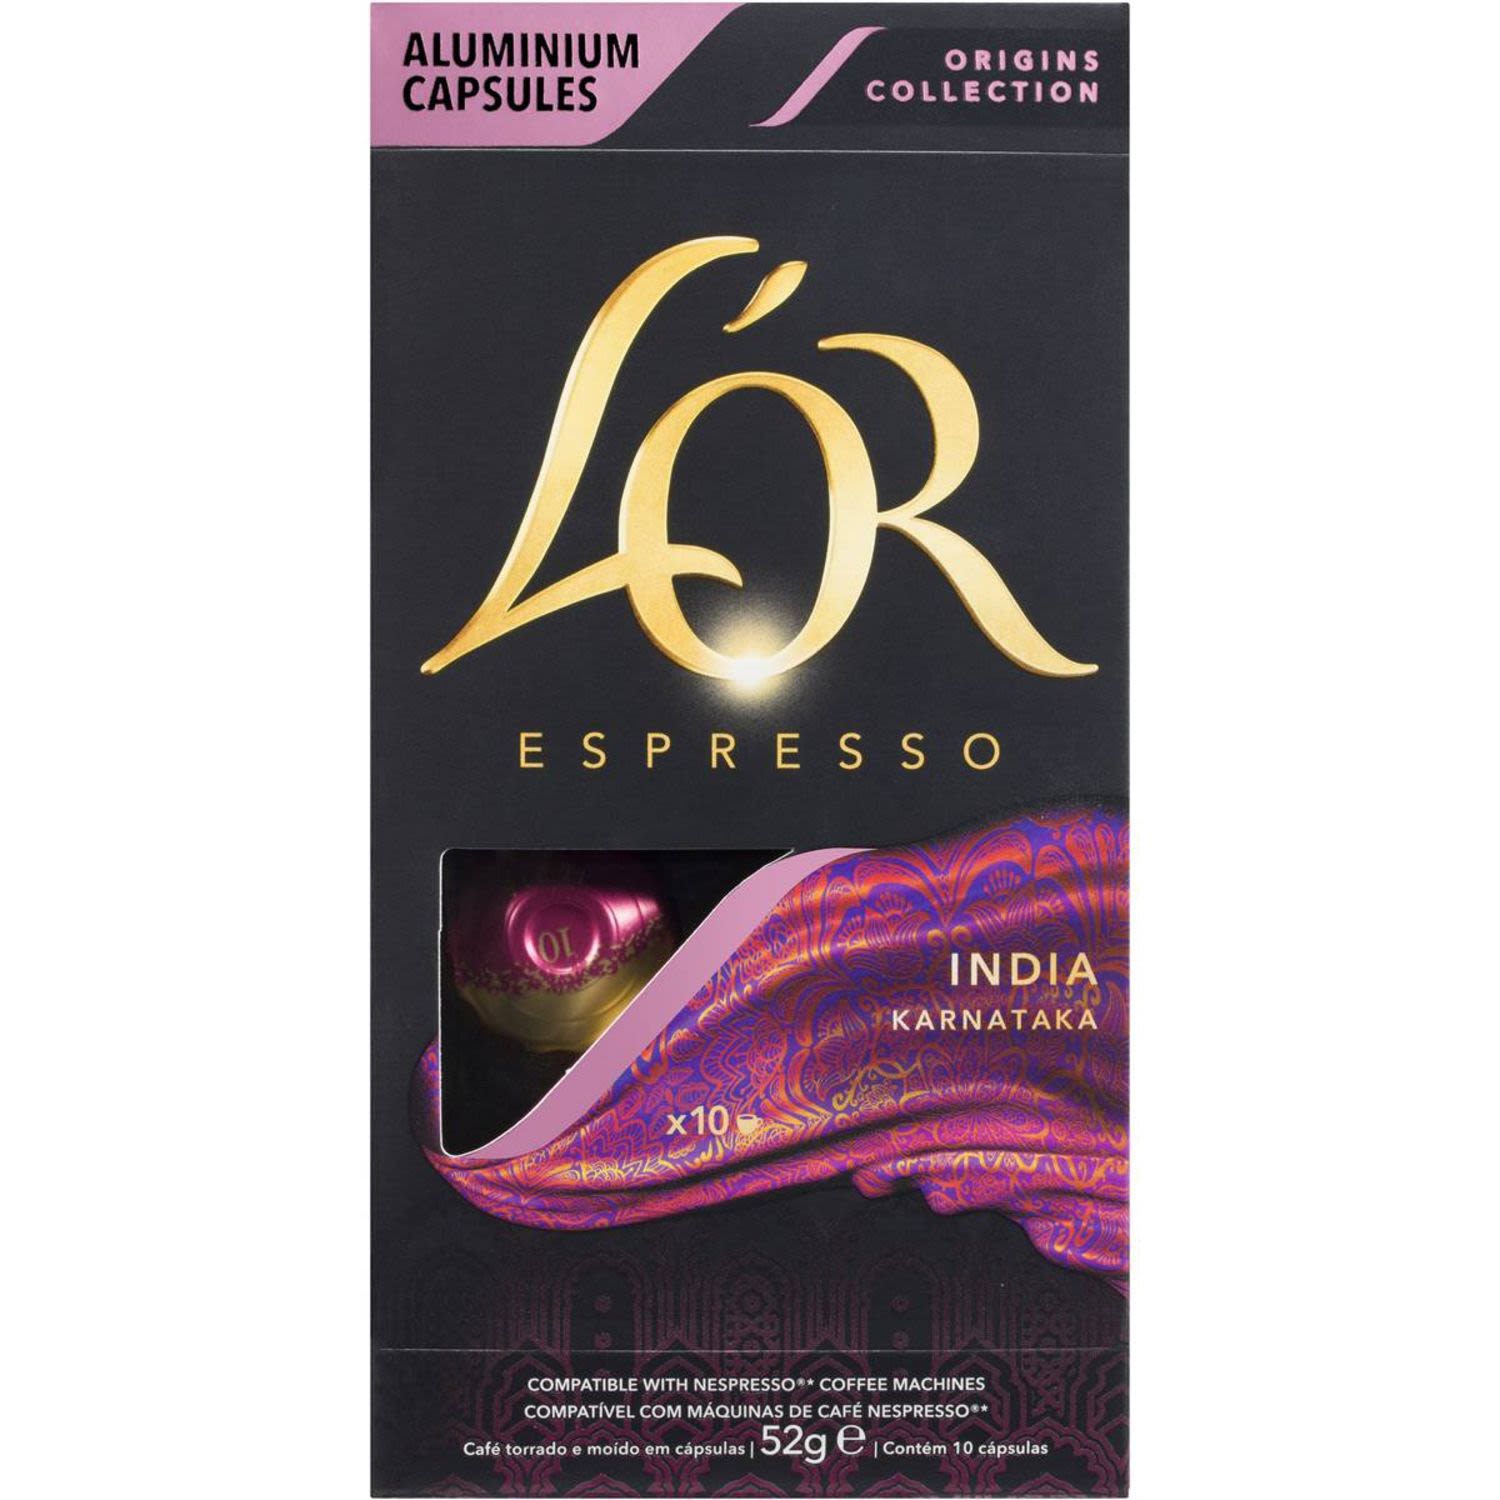 L'OR Espresso India Coffee Capsules, 10 Each